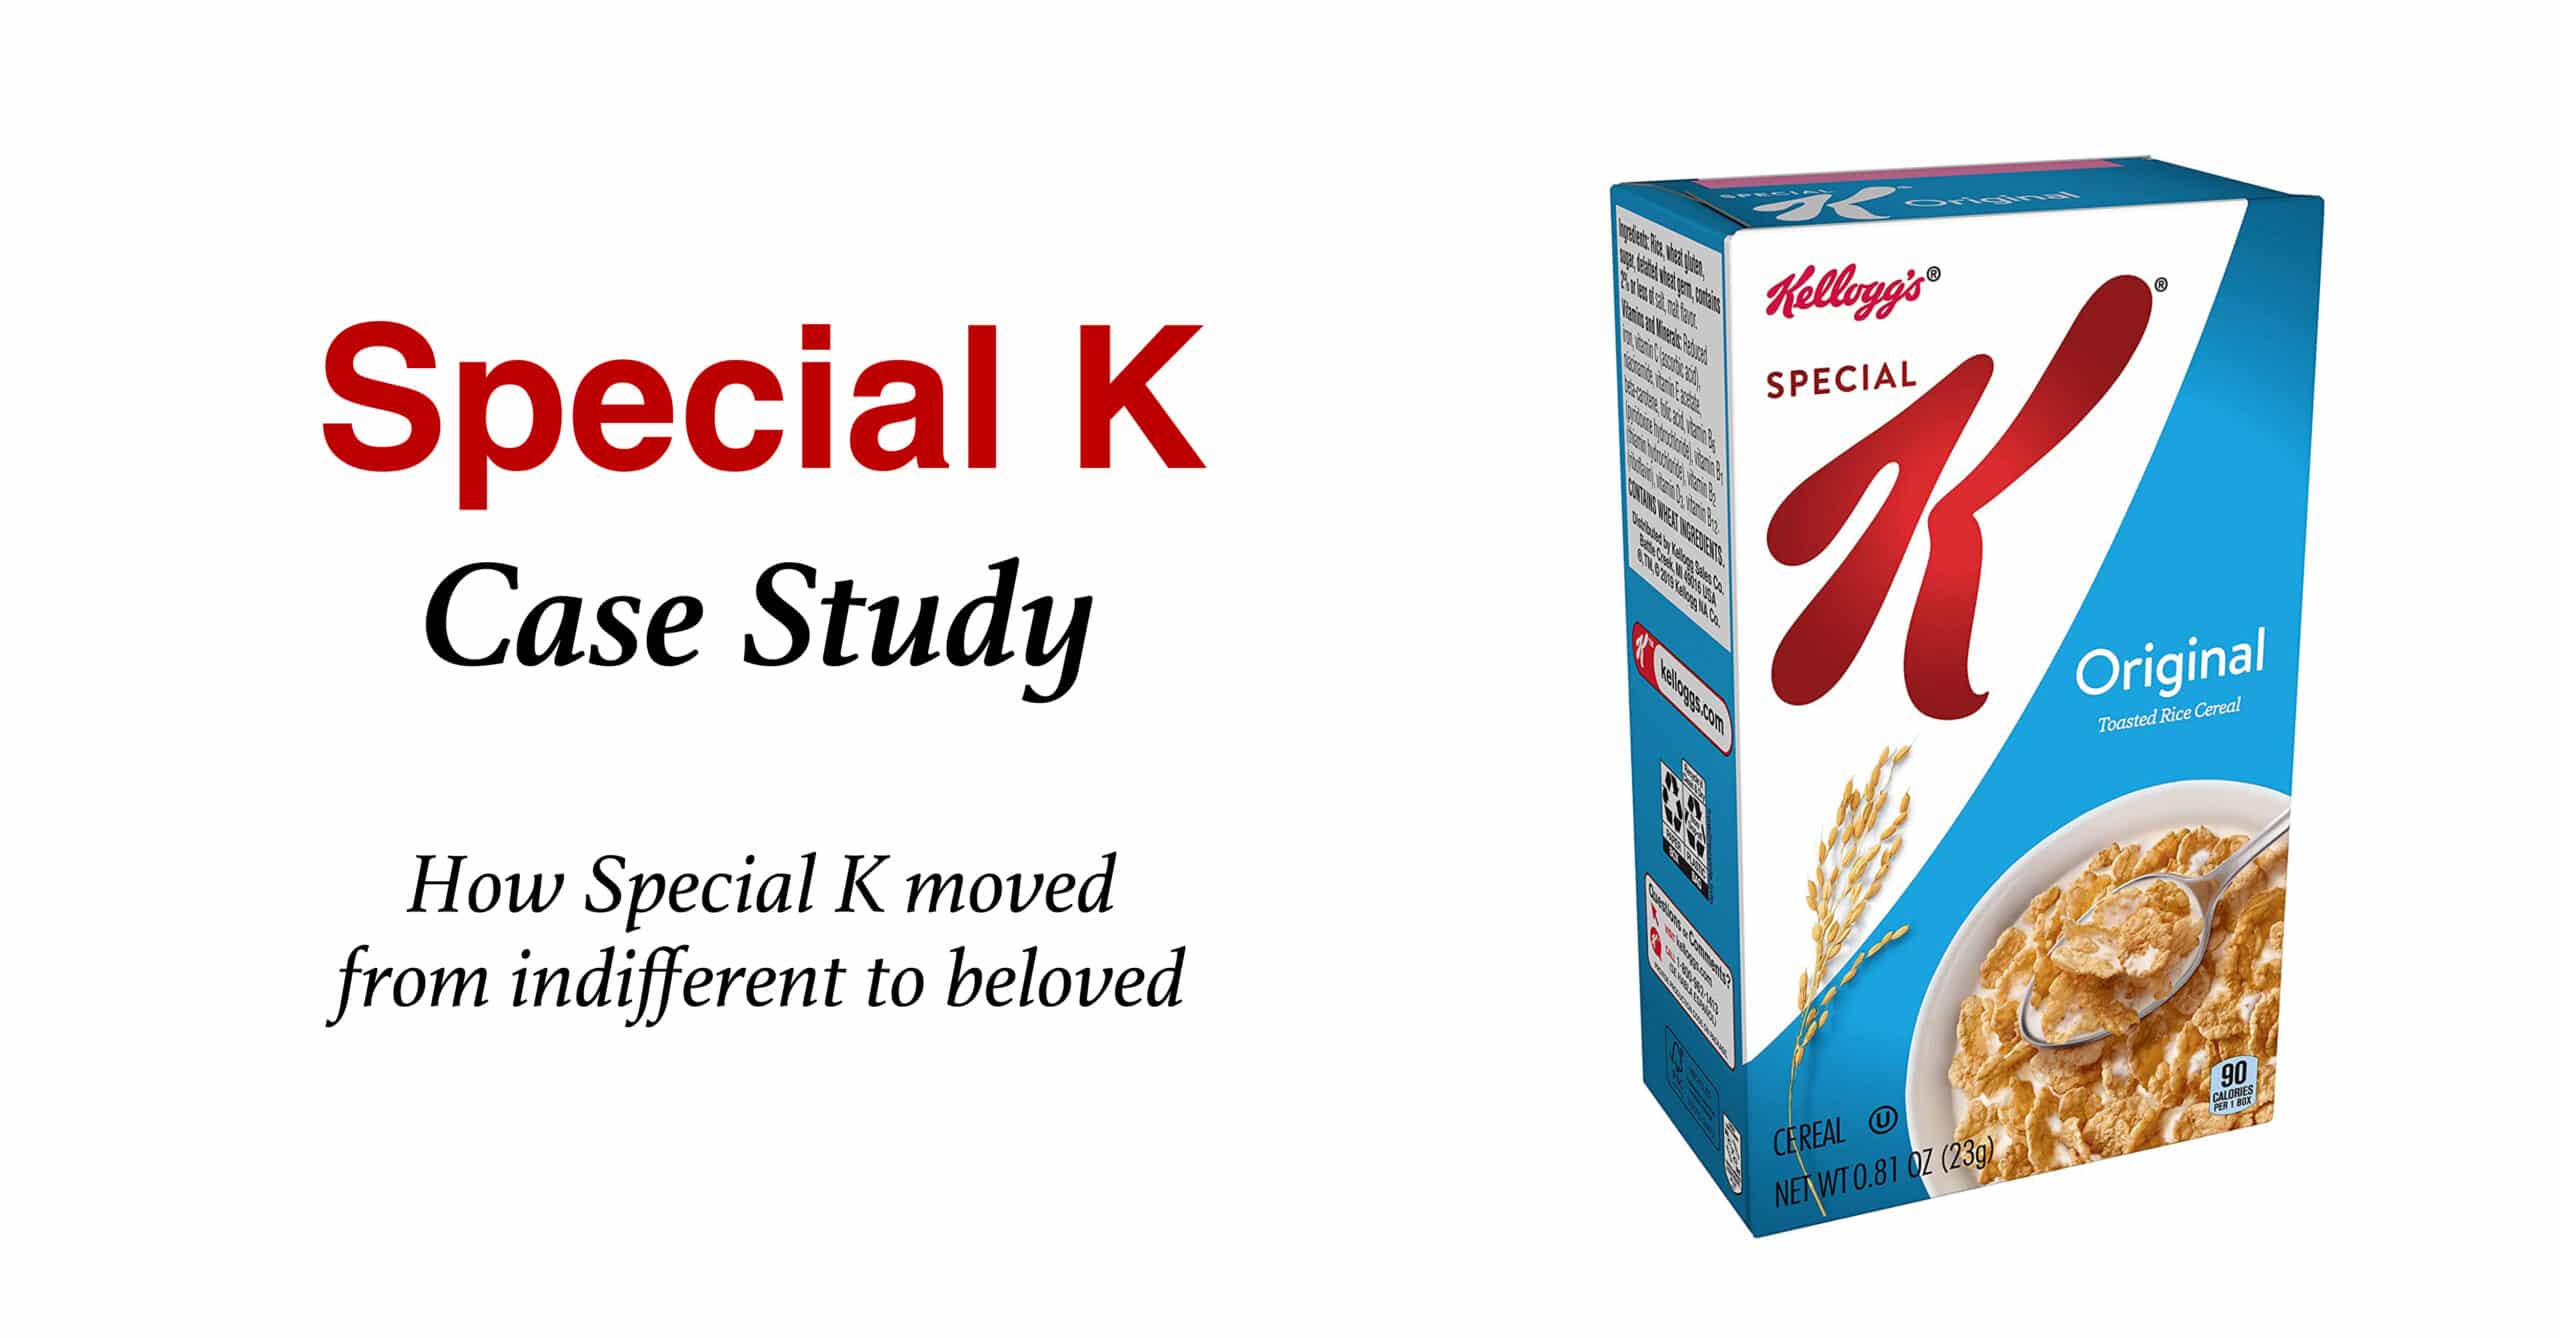 Special K brand case study